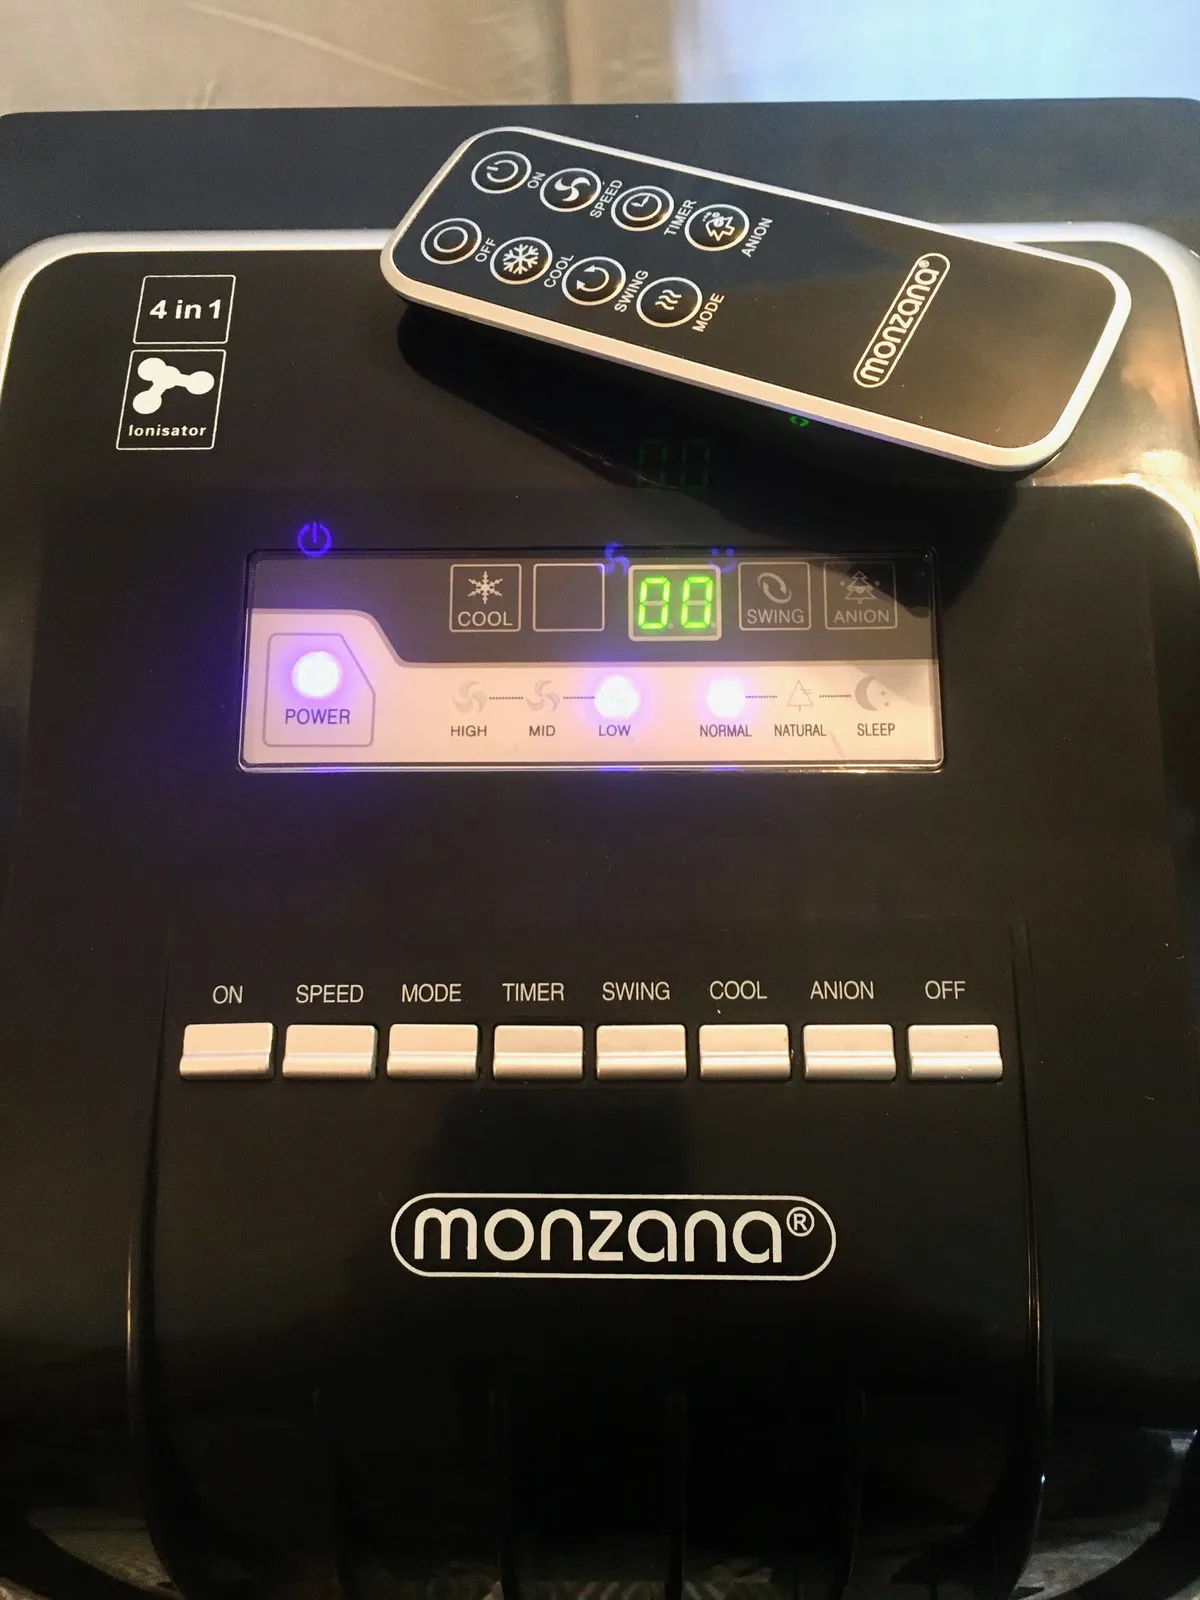 Monzana 4-in-1 ionizer air cooler, Amazon